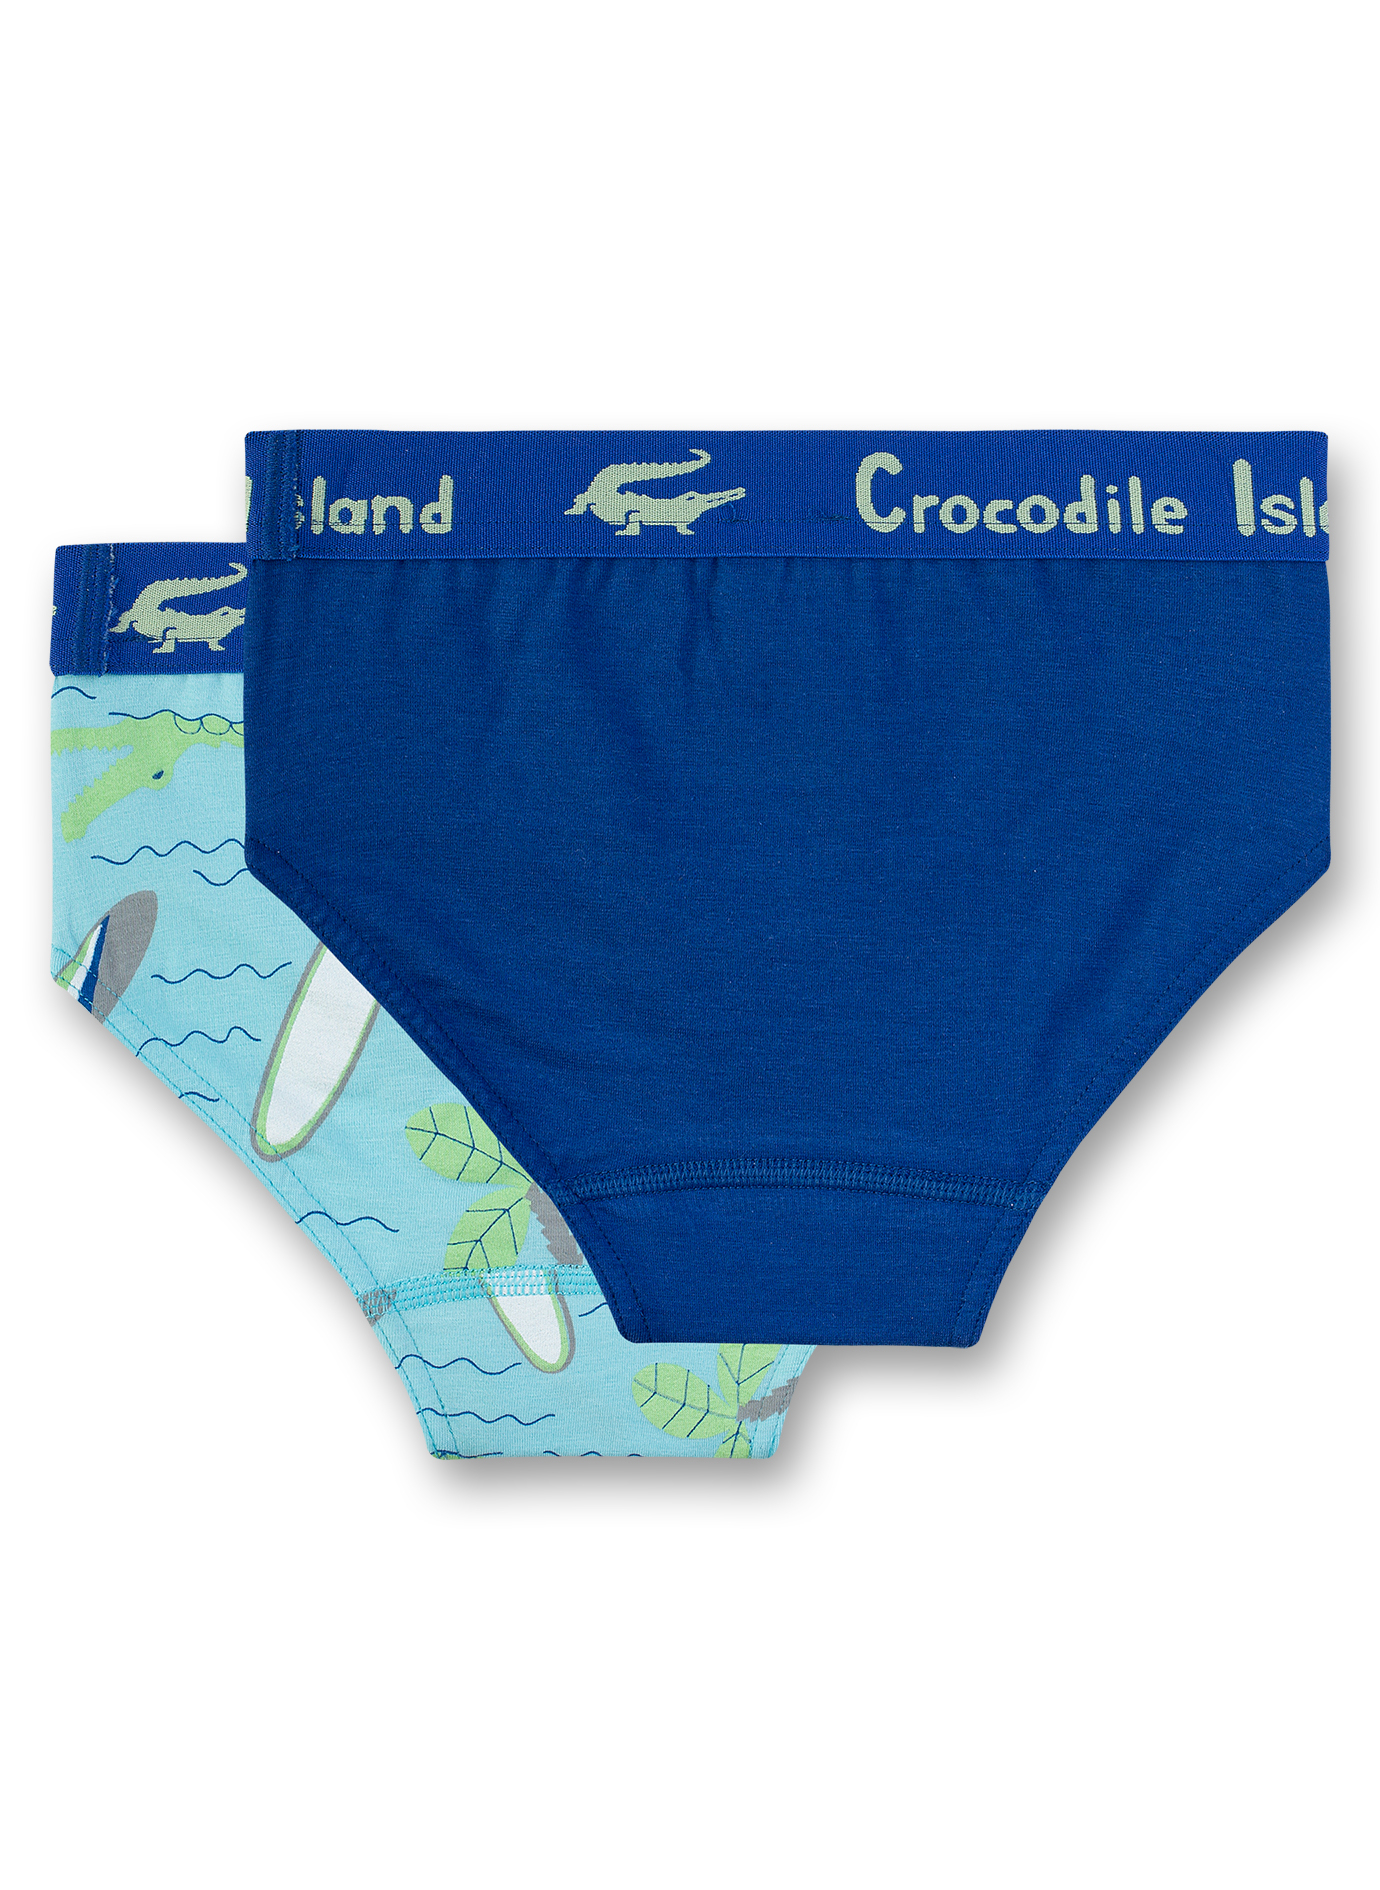 Jungen-Slip (Doppelpack) Blau und Hellblau Crocodile Island